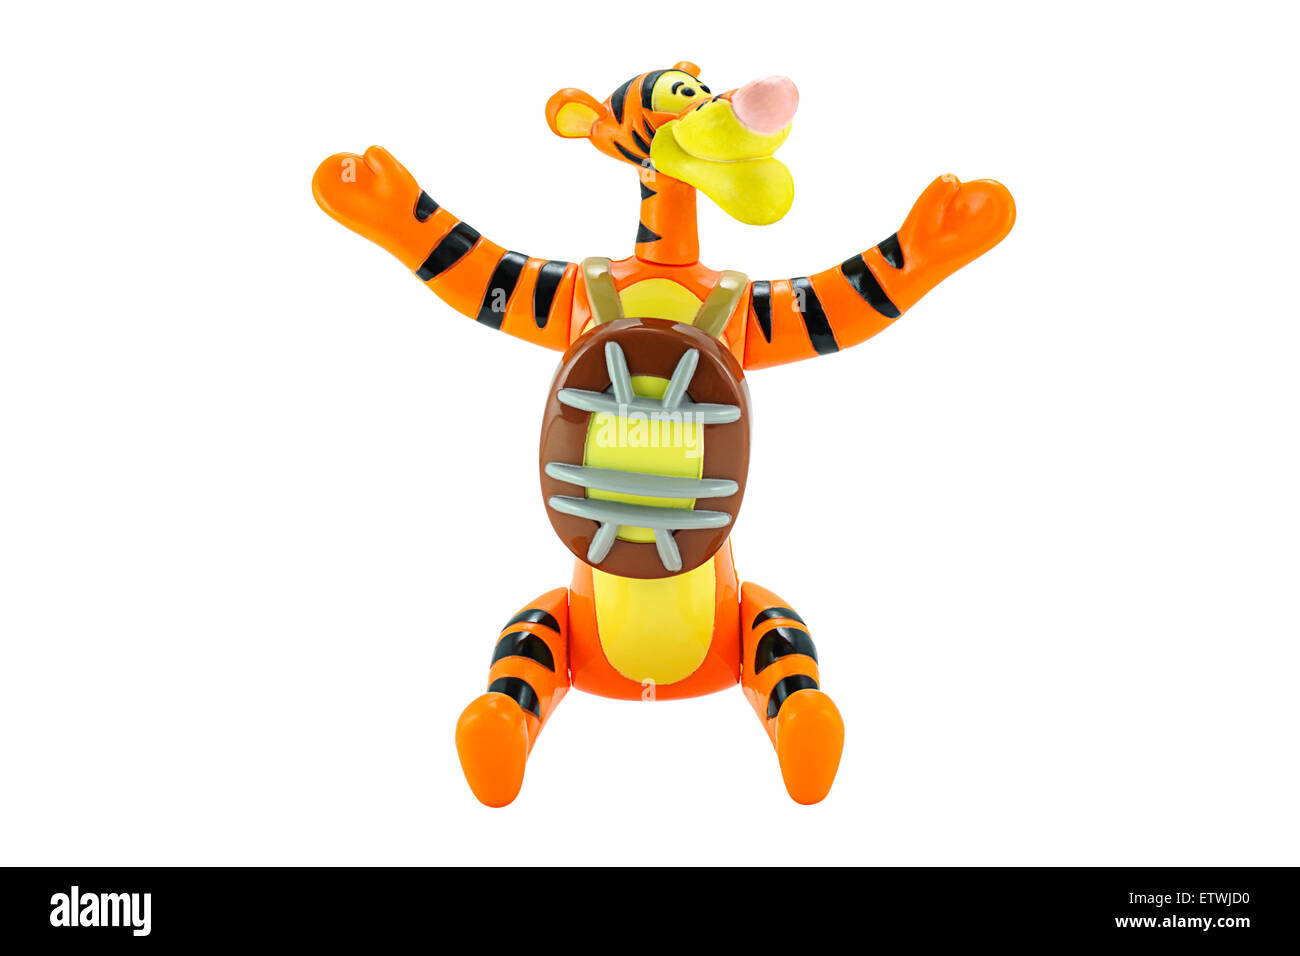 Bangkok,Thailand - February 15, 2015: Tigger tiger toy character from Disney Winnie the Pooh cartoon. Stock Photo